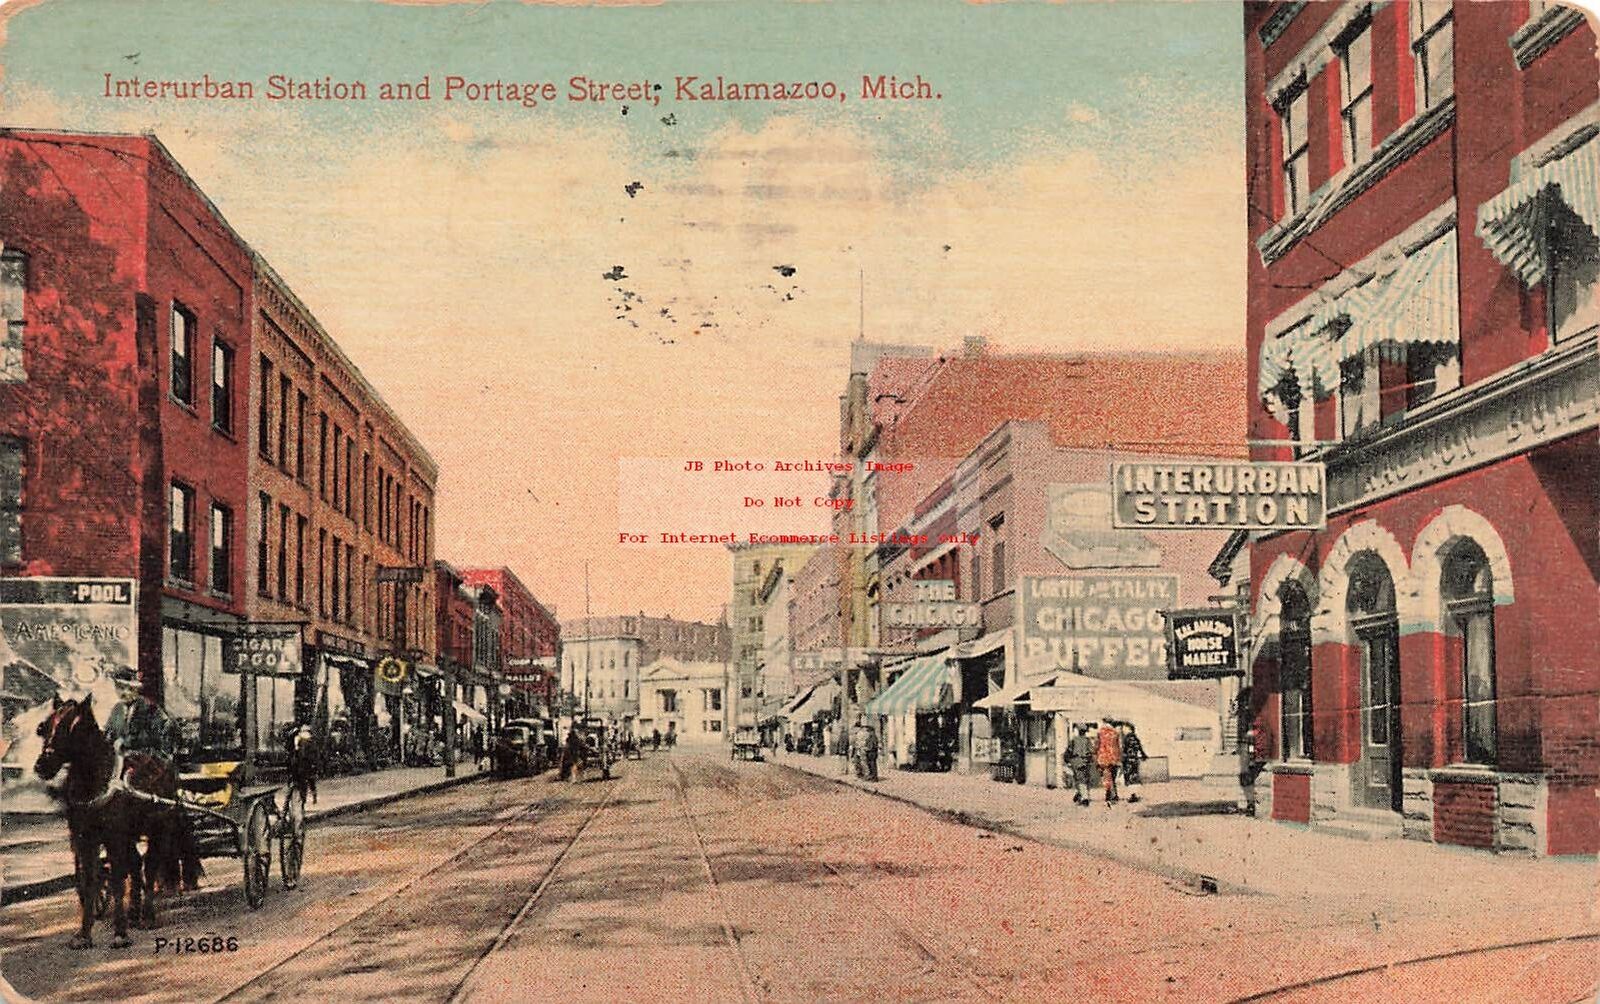 MI, Kalamazoo, Michigan, Interurban Station, Portage Street, 1914 PM, No P12686